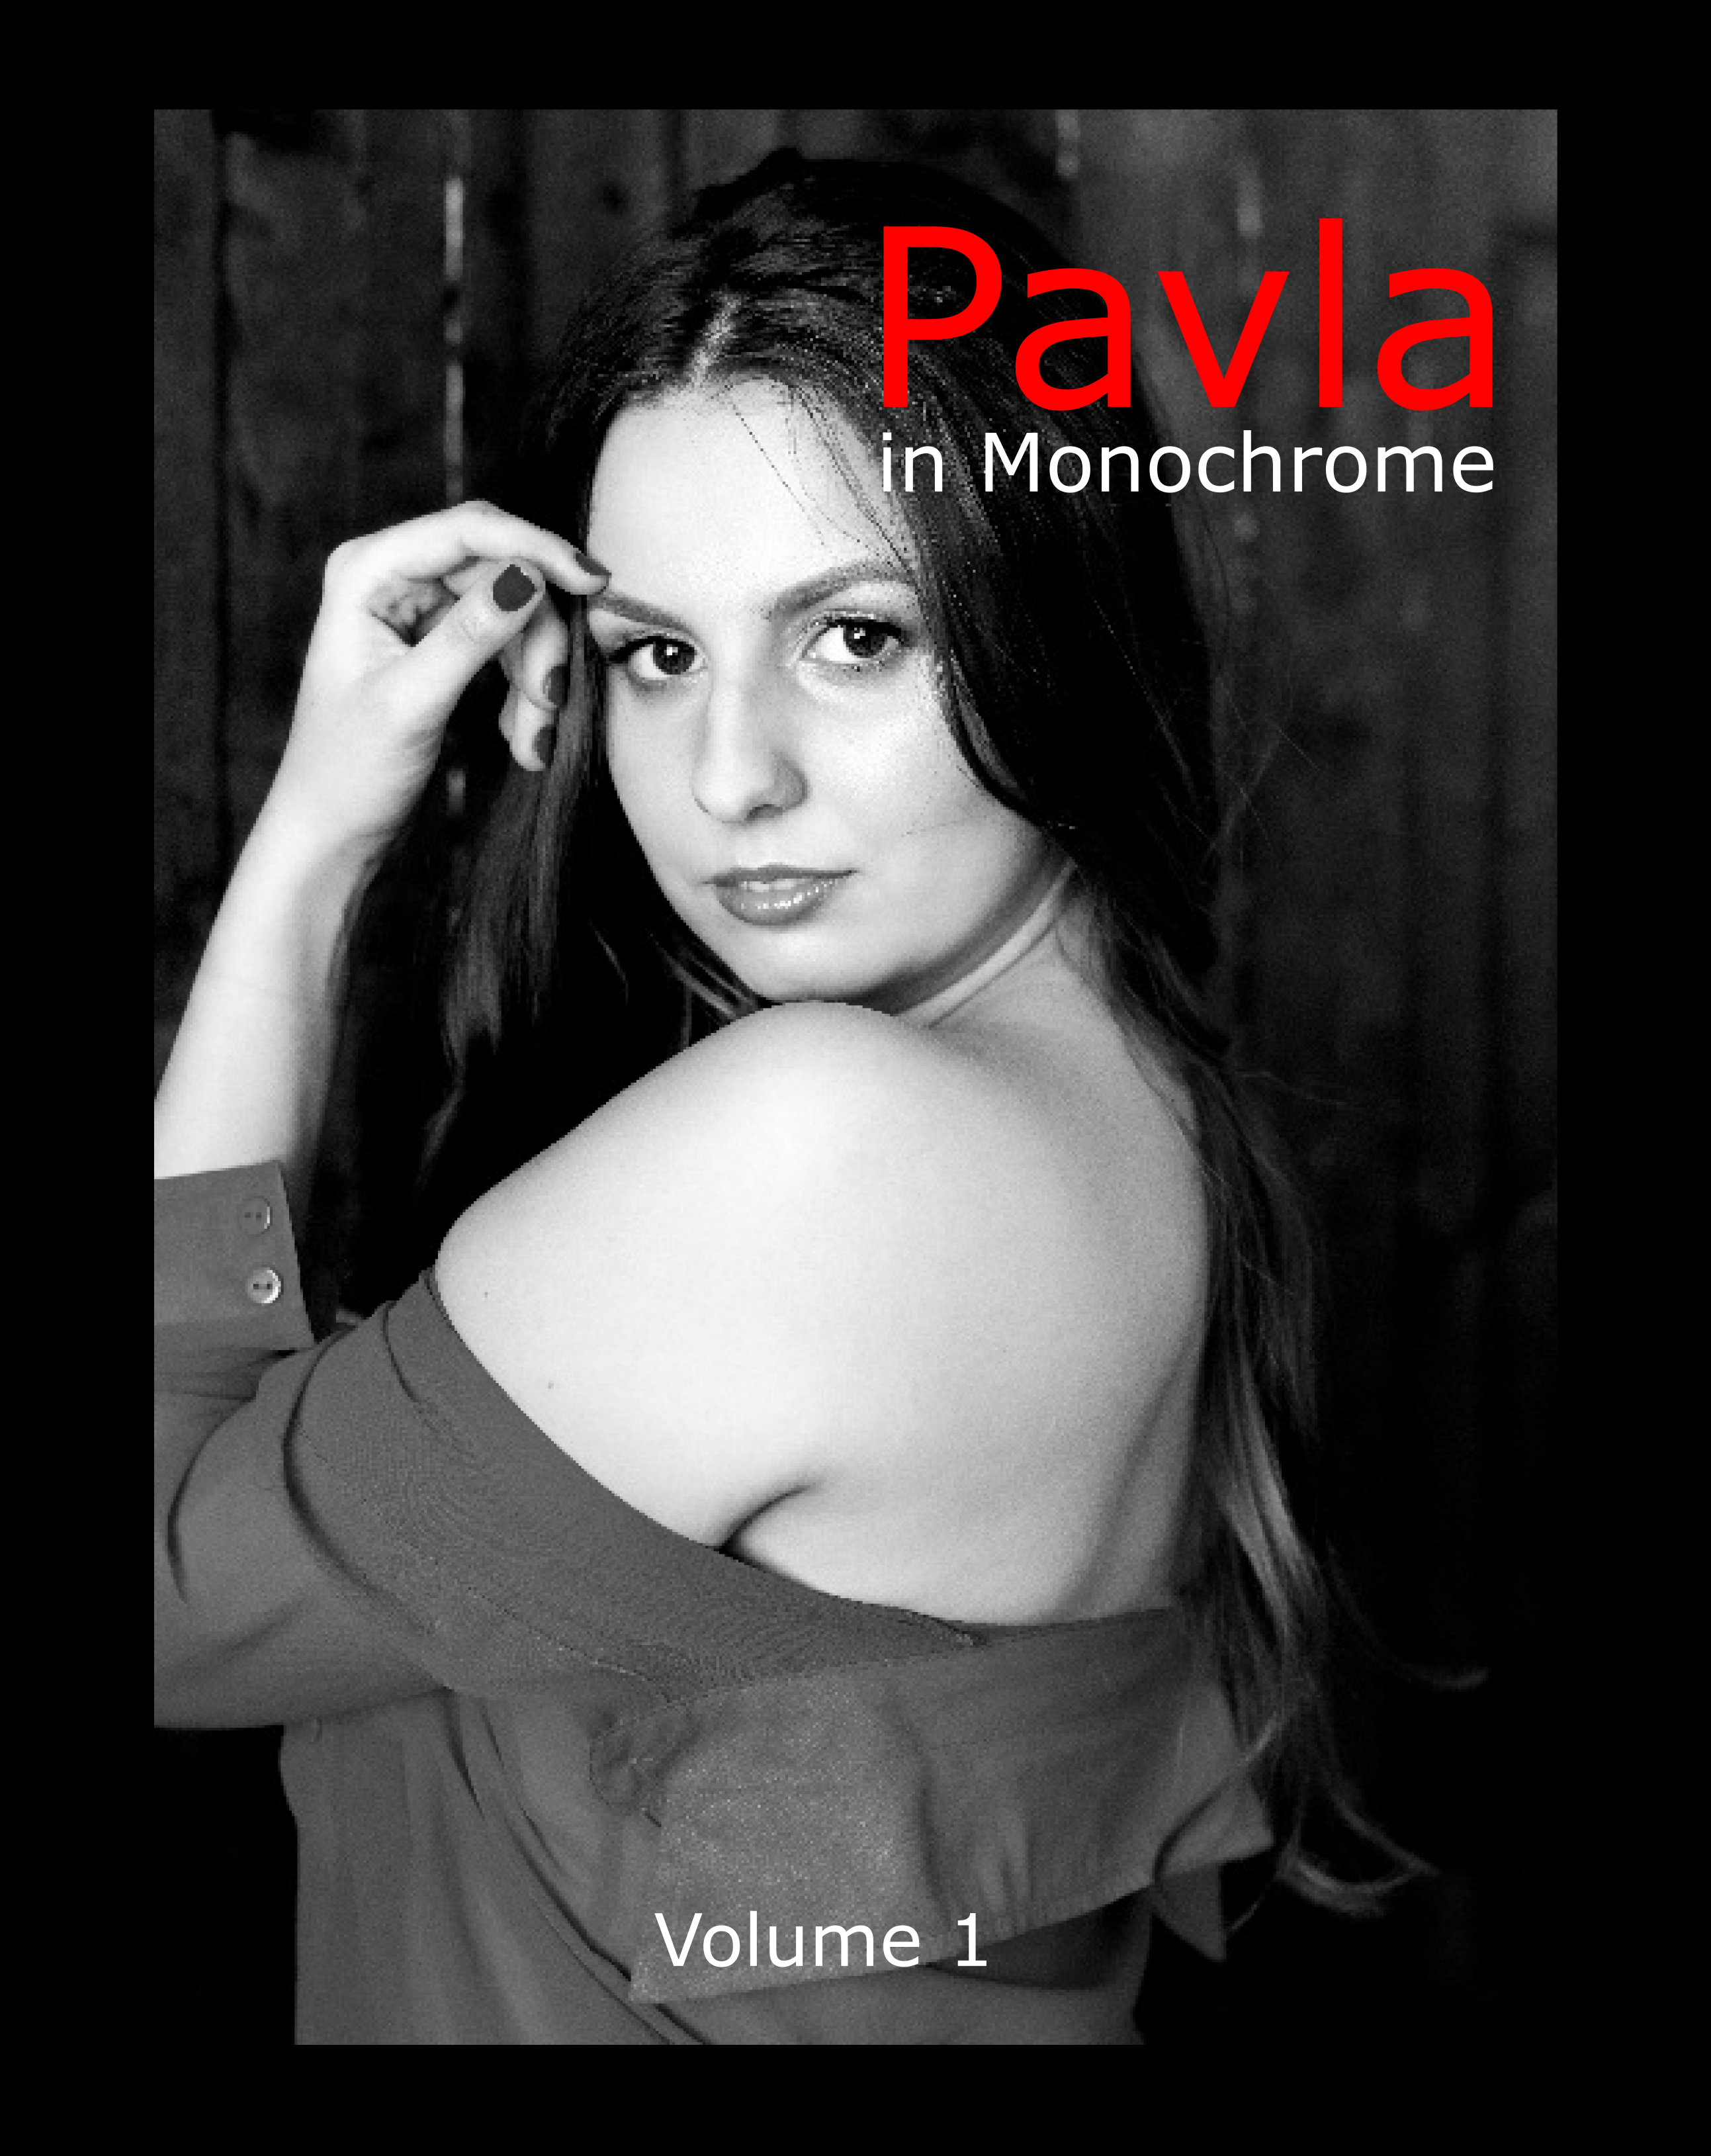 Pavla – Downloads available